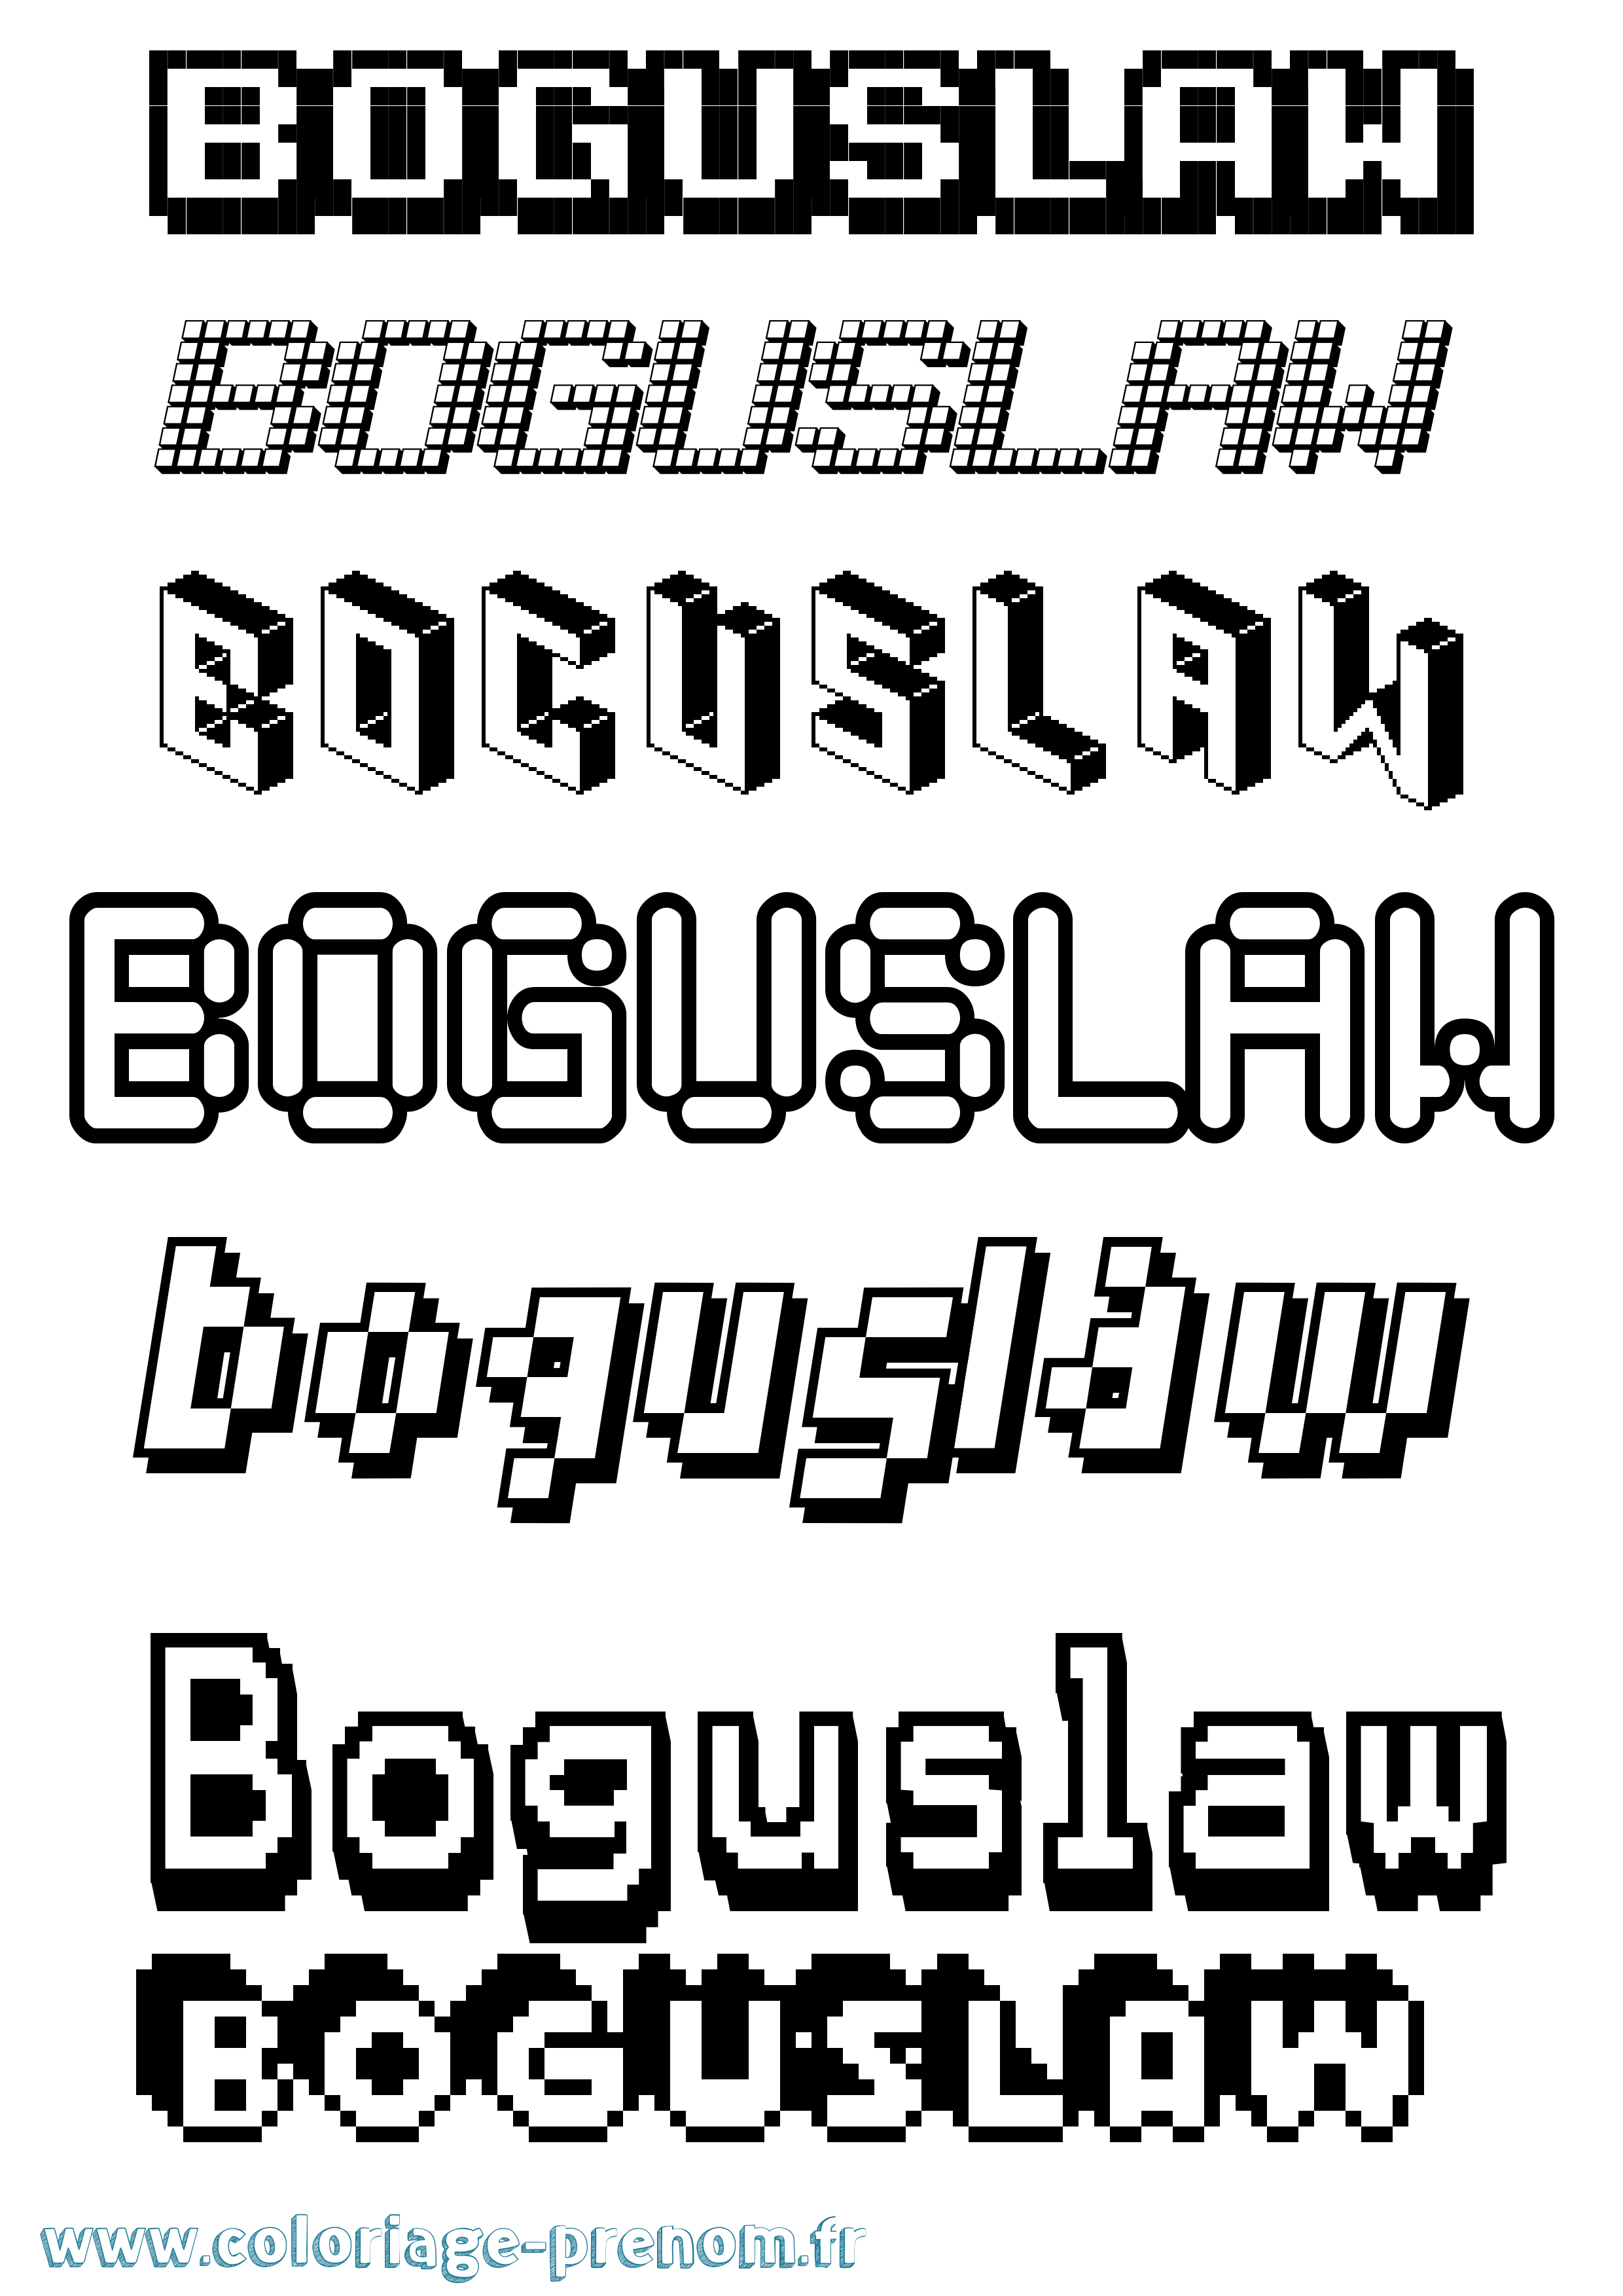 Coloriage prénom Boguslaw Pixel